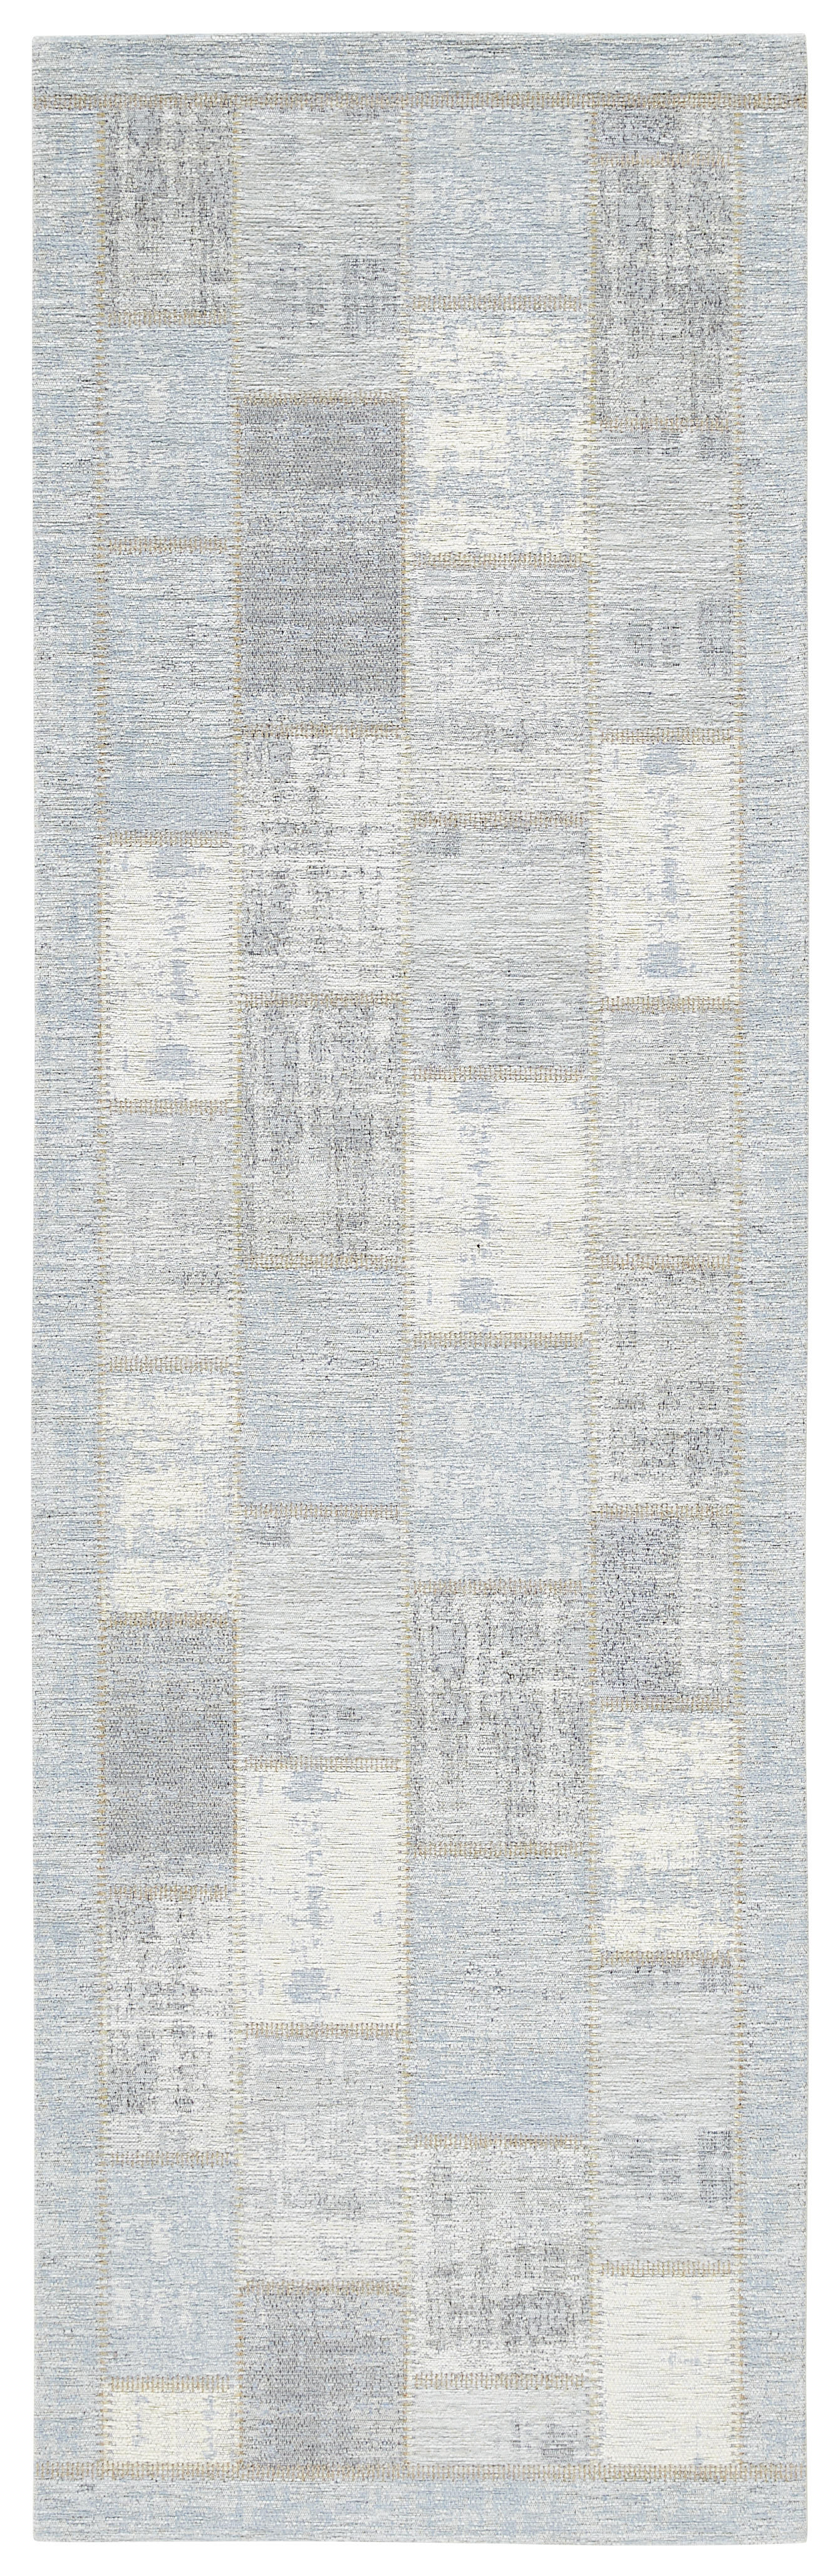 LÄUFER 68/220 cm  - Hellblau, Trend, Textil (68/220cm) - Novel